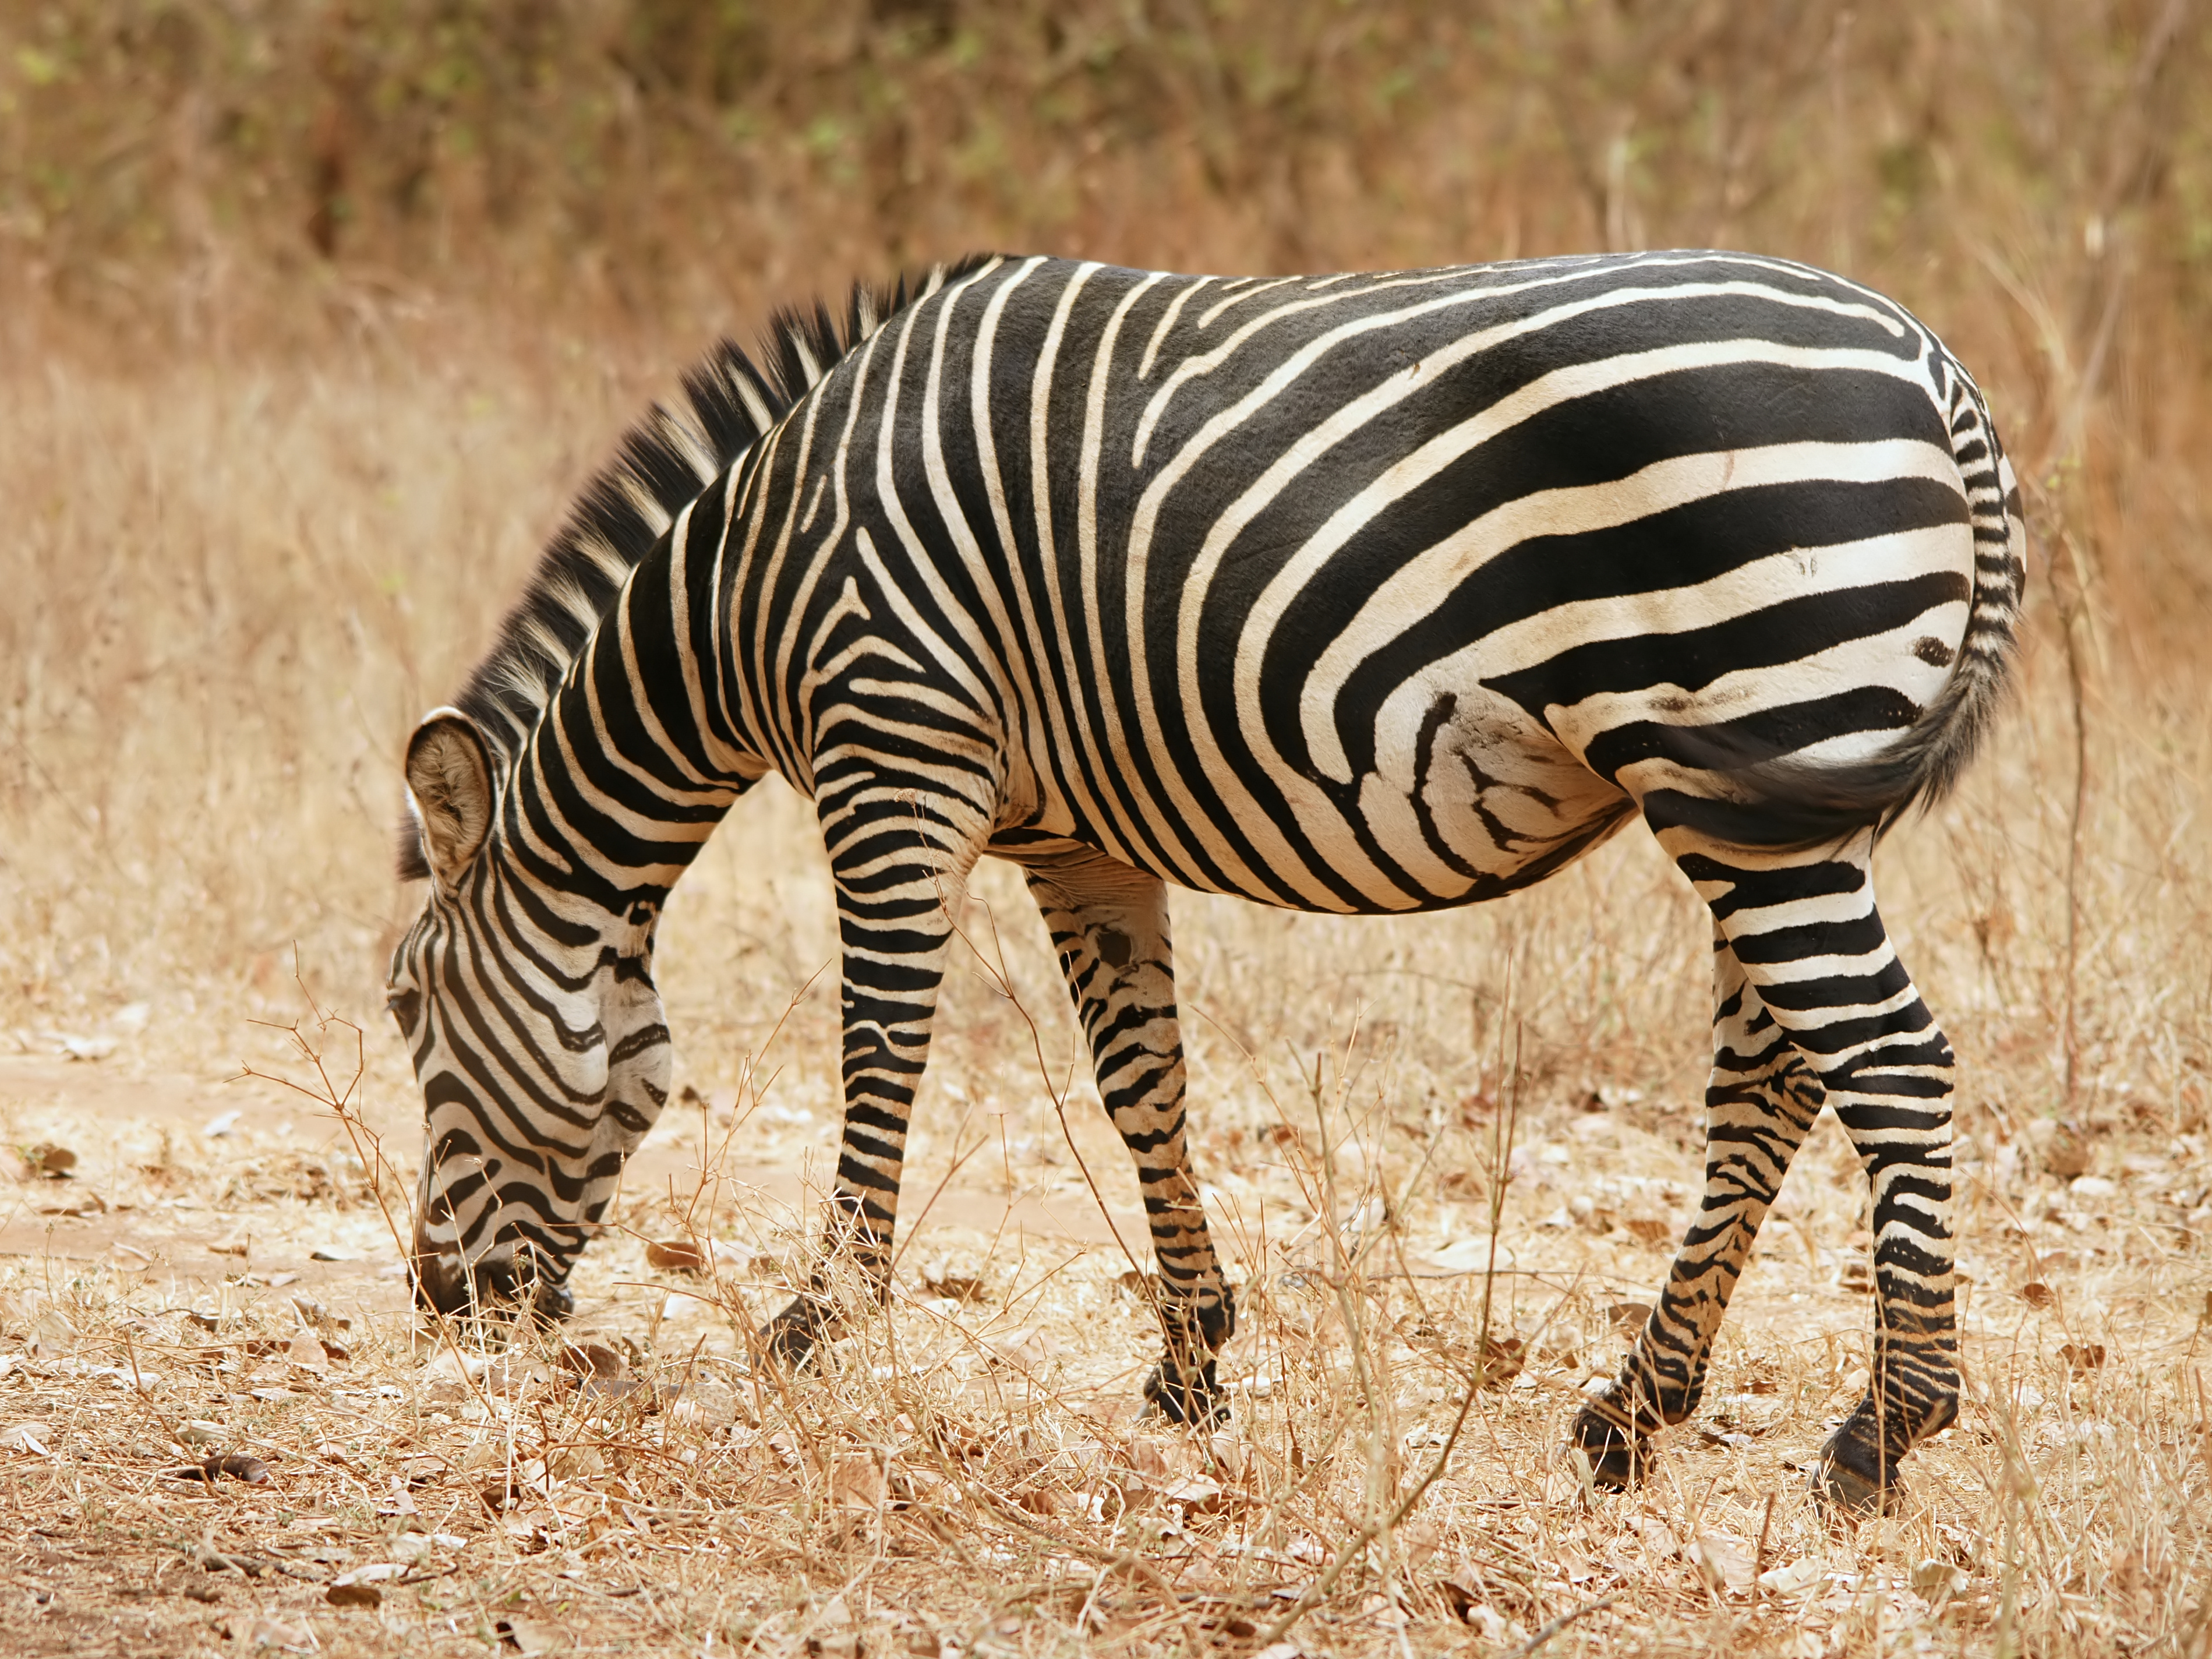 Grant's Zebra close to Chilanga near Lusaka, Zambia. Photo taken on August 2, 2010.